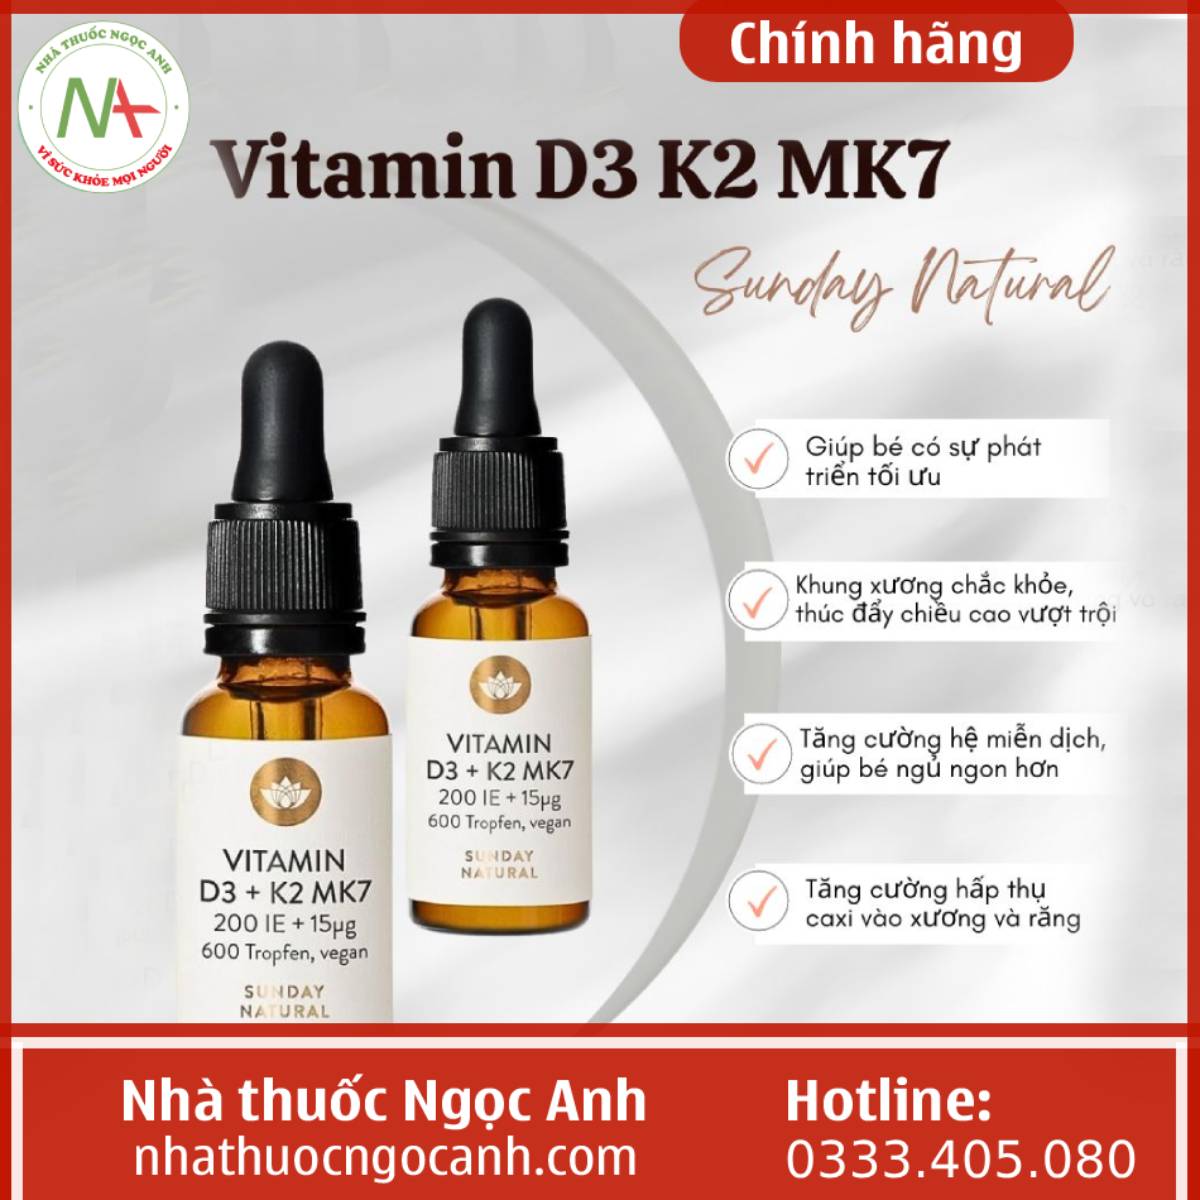 Vitamin D3+K2 MK7 Sunday Natural